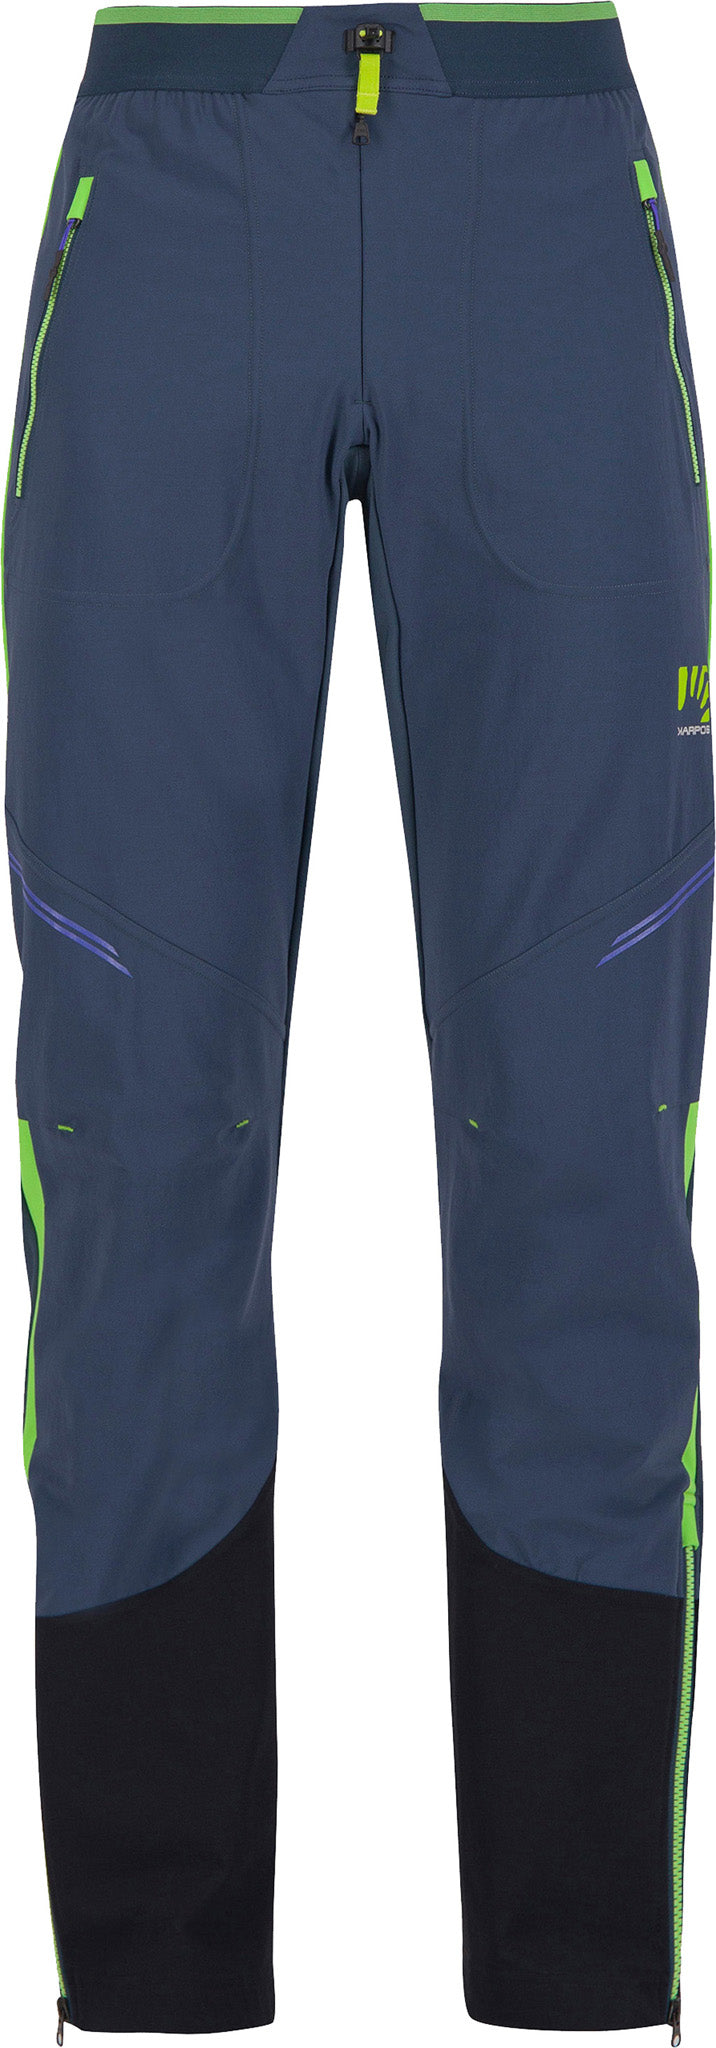 Outdoor Research Ferrosi Convertible Pants - 30 Inseam - Men's